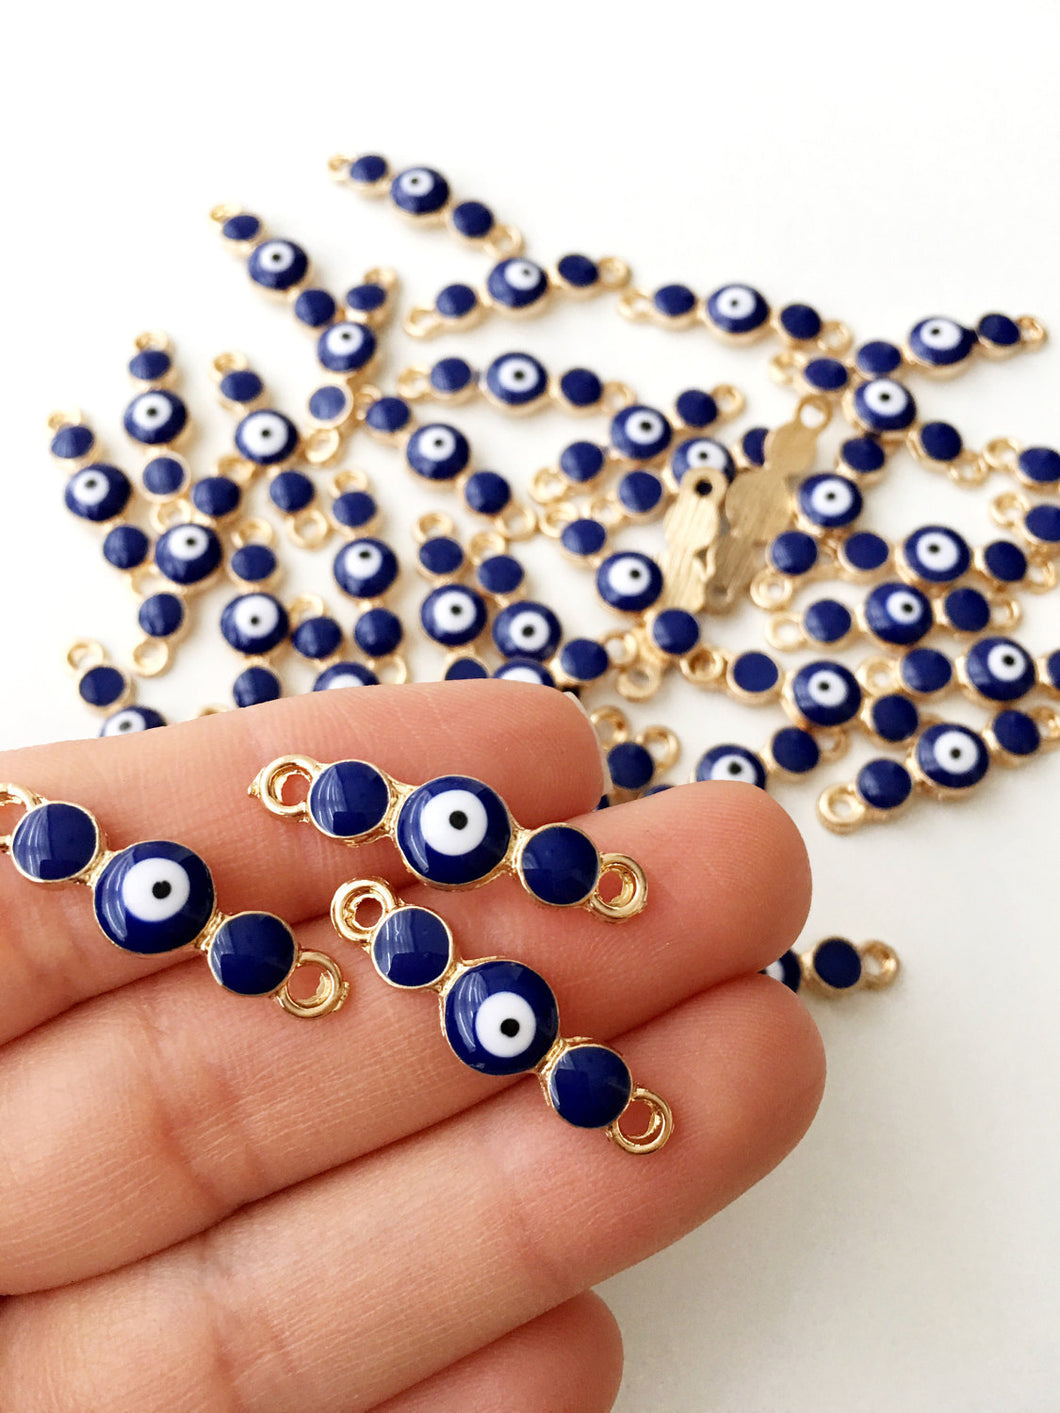 3 pcs Gold plated blue evil eye charm, evil eye pendant, evil eye connector - Evileyefavor